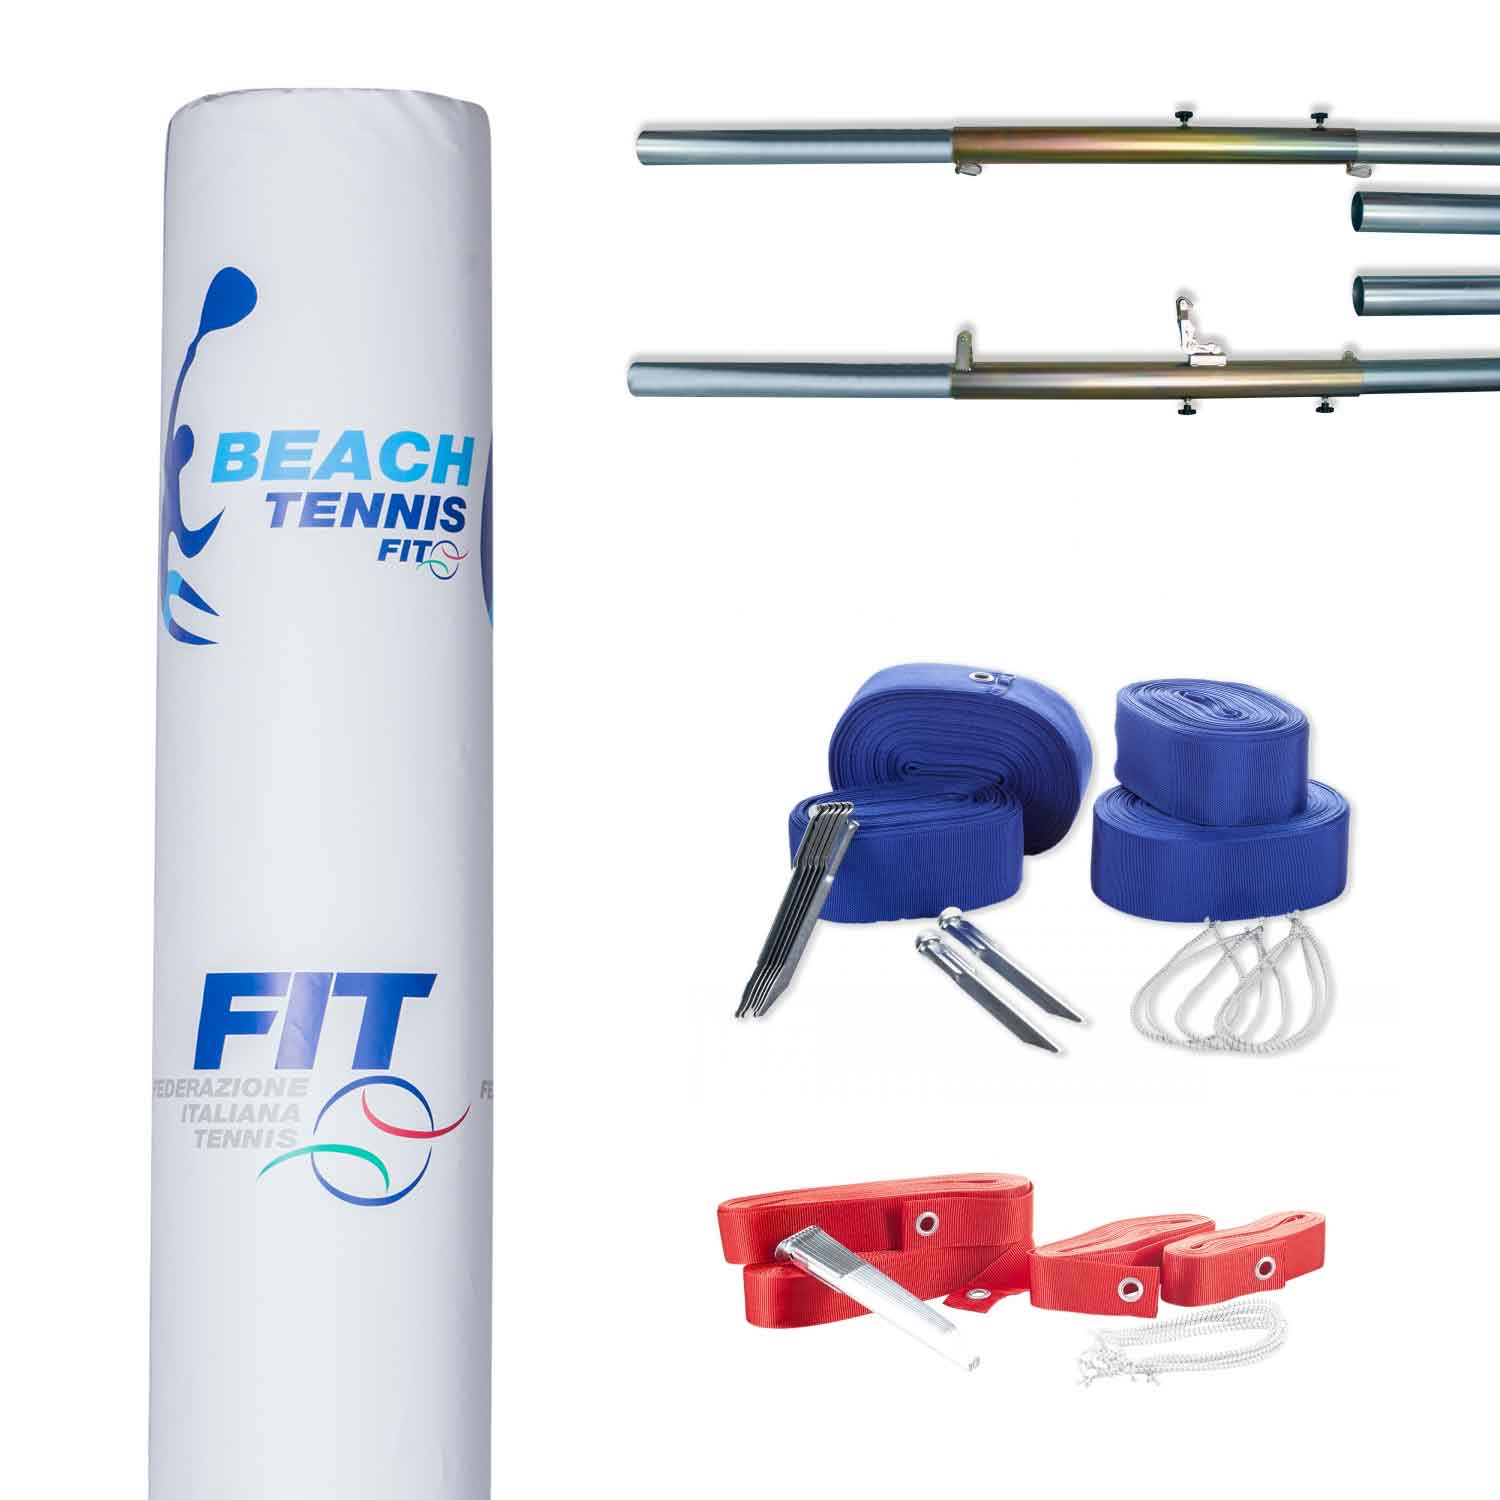 Beach volleyball and beach tennis equipments